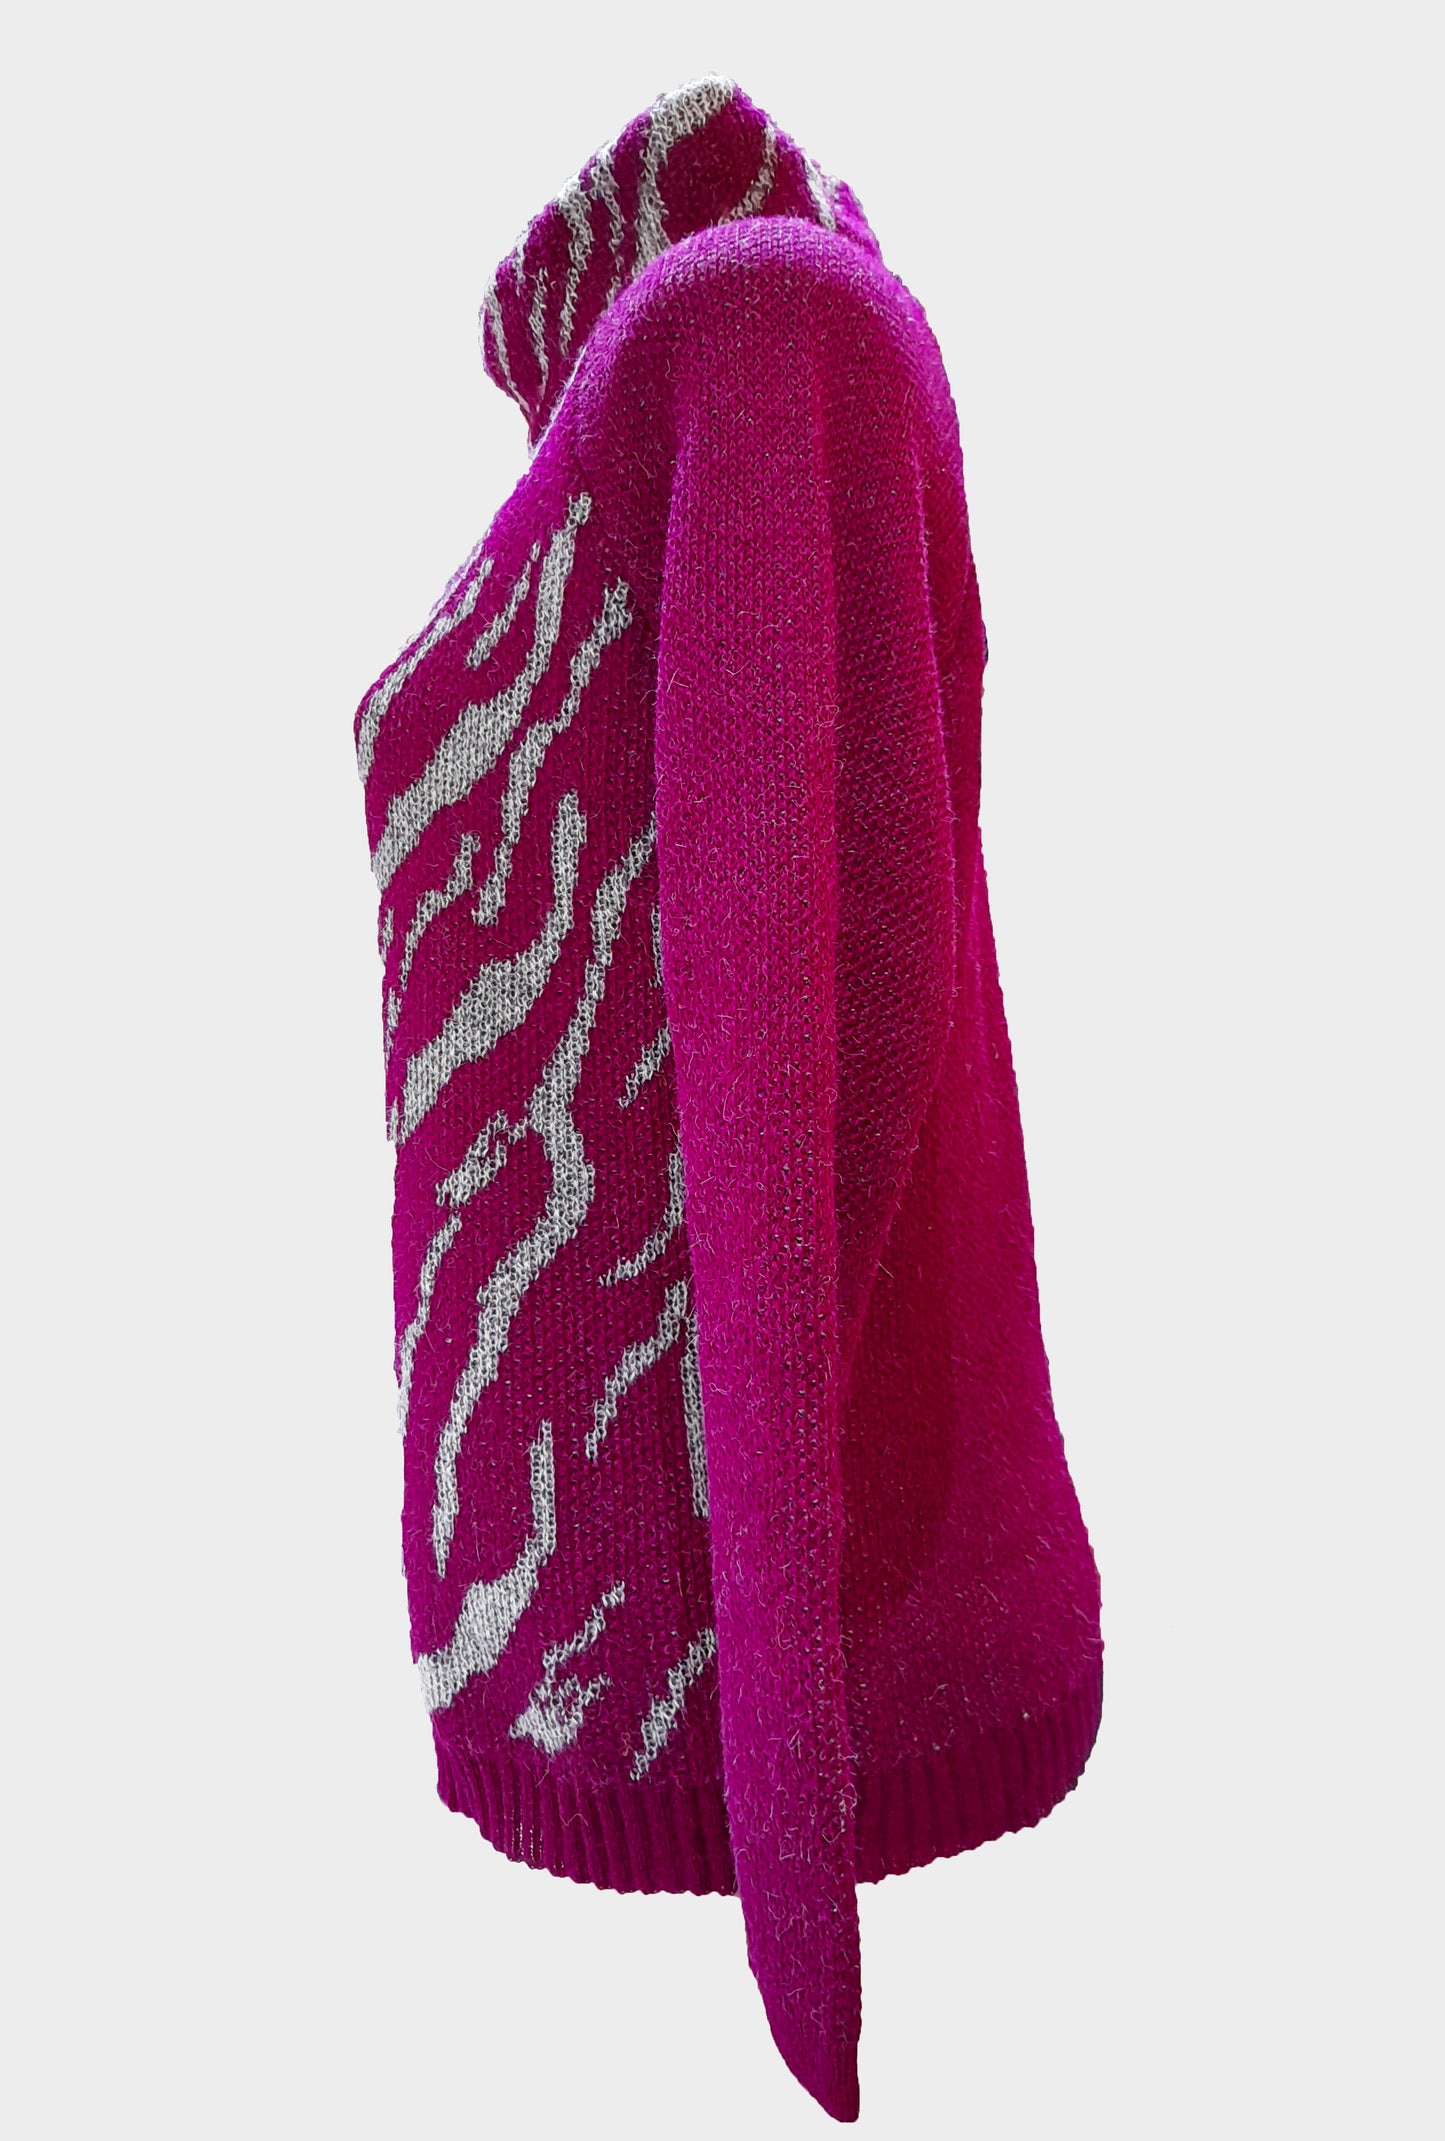 Alpaca Women’s Casual Leopard Print Long Sleeve Crew Neck